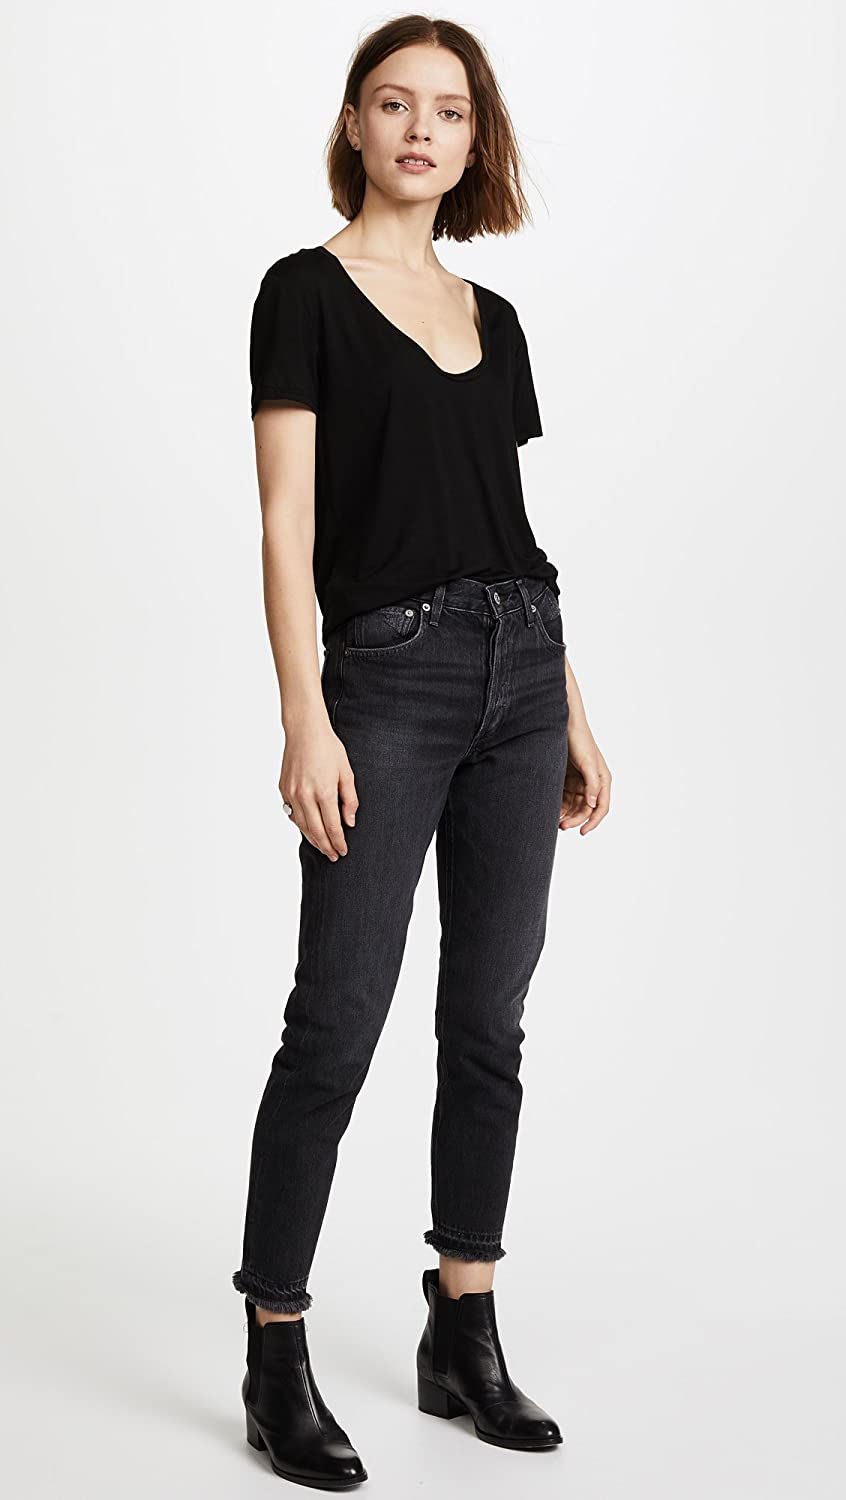 Women's Scoop Neck Short Sleeve T-Shirt, Black, Size Small 29Rd | eBay